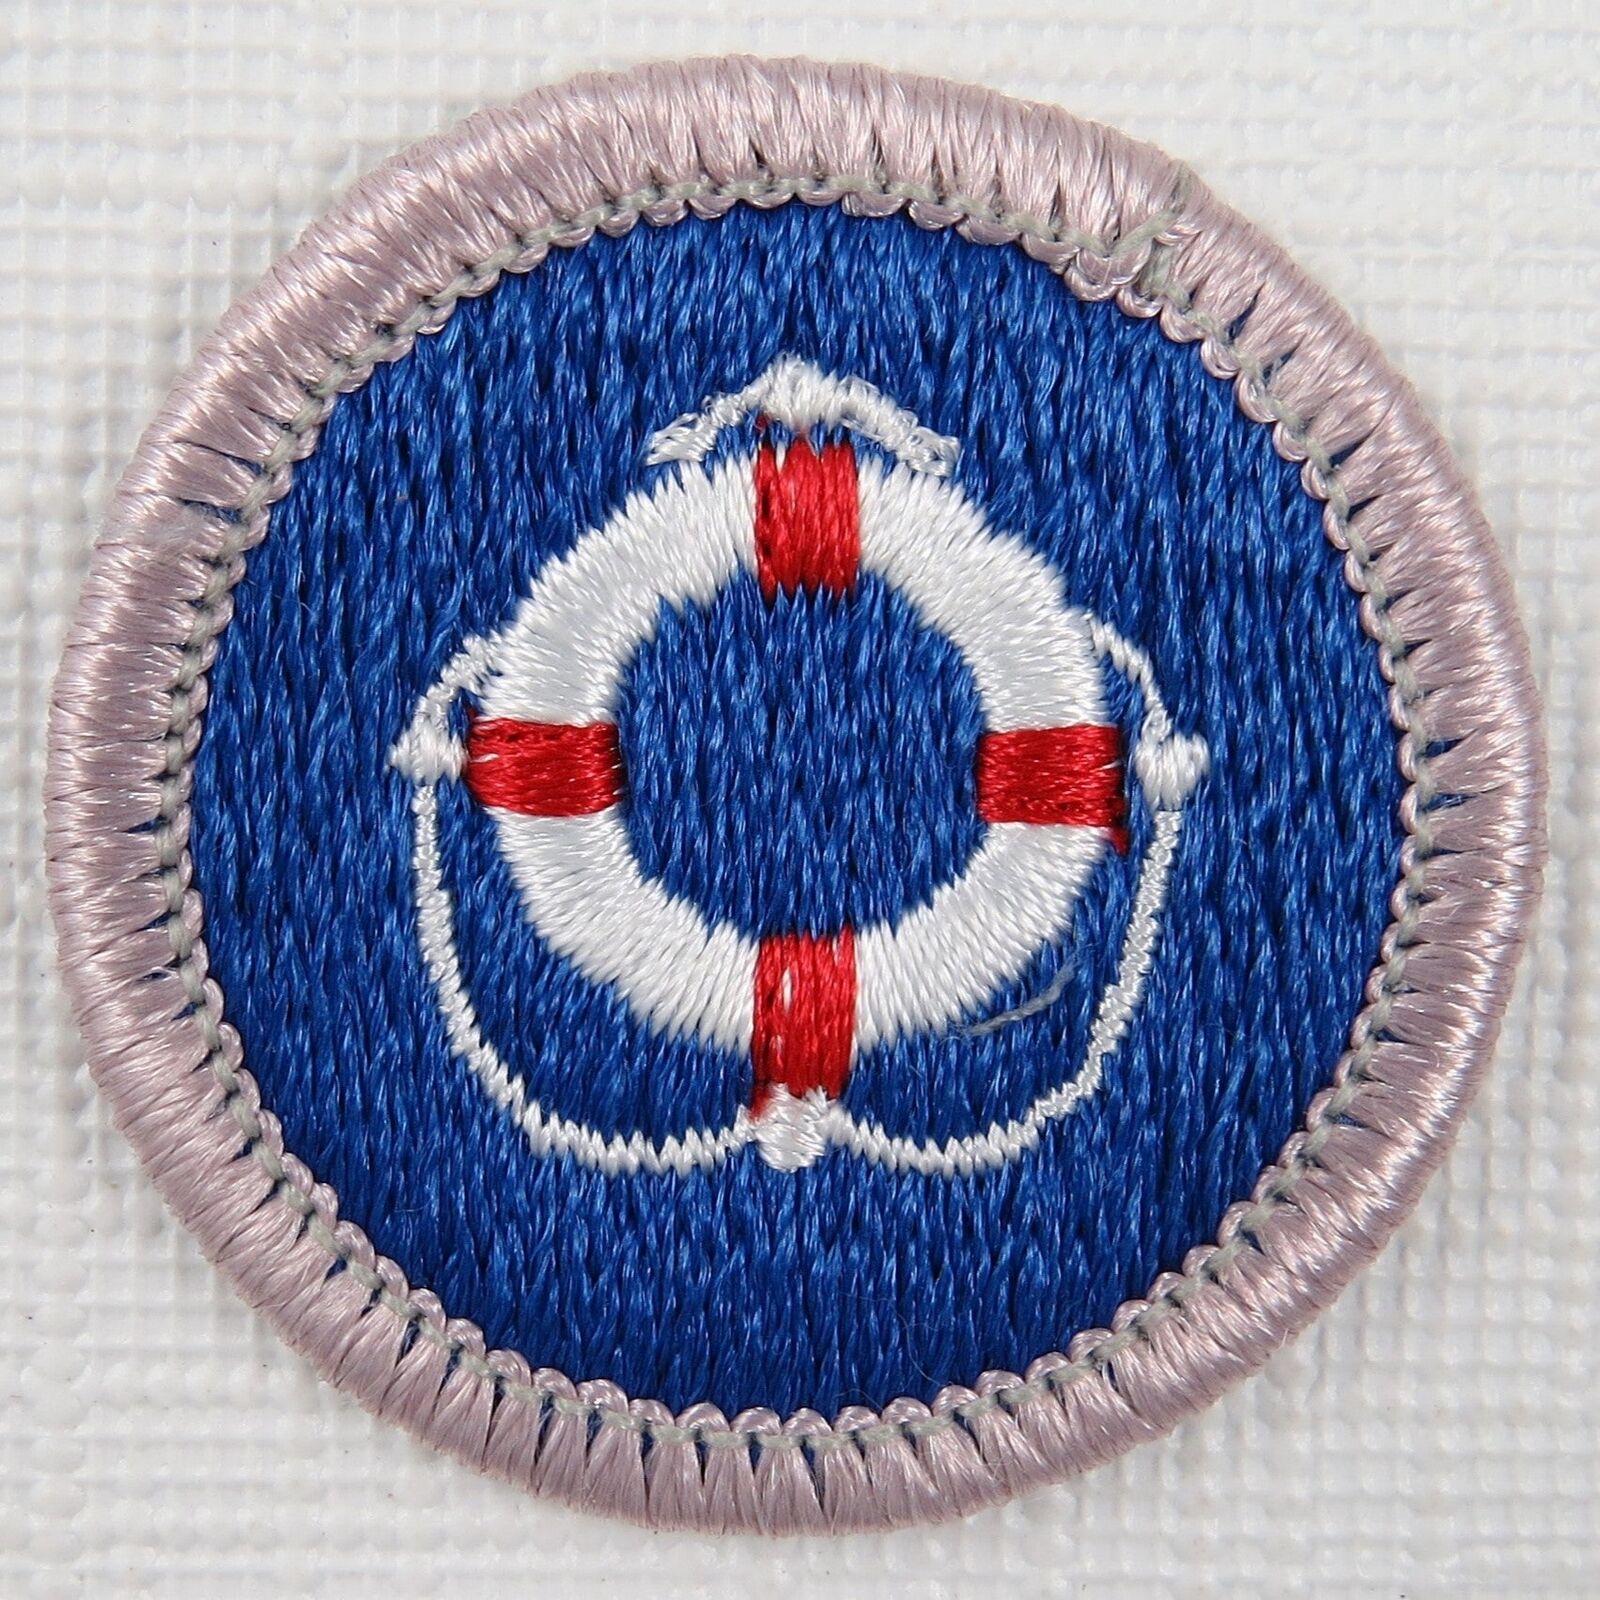 Life Saving Current Plastic Back Merit Badge [MB-141]